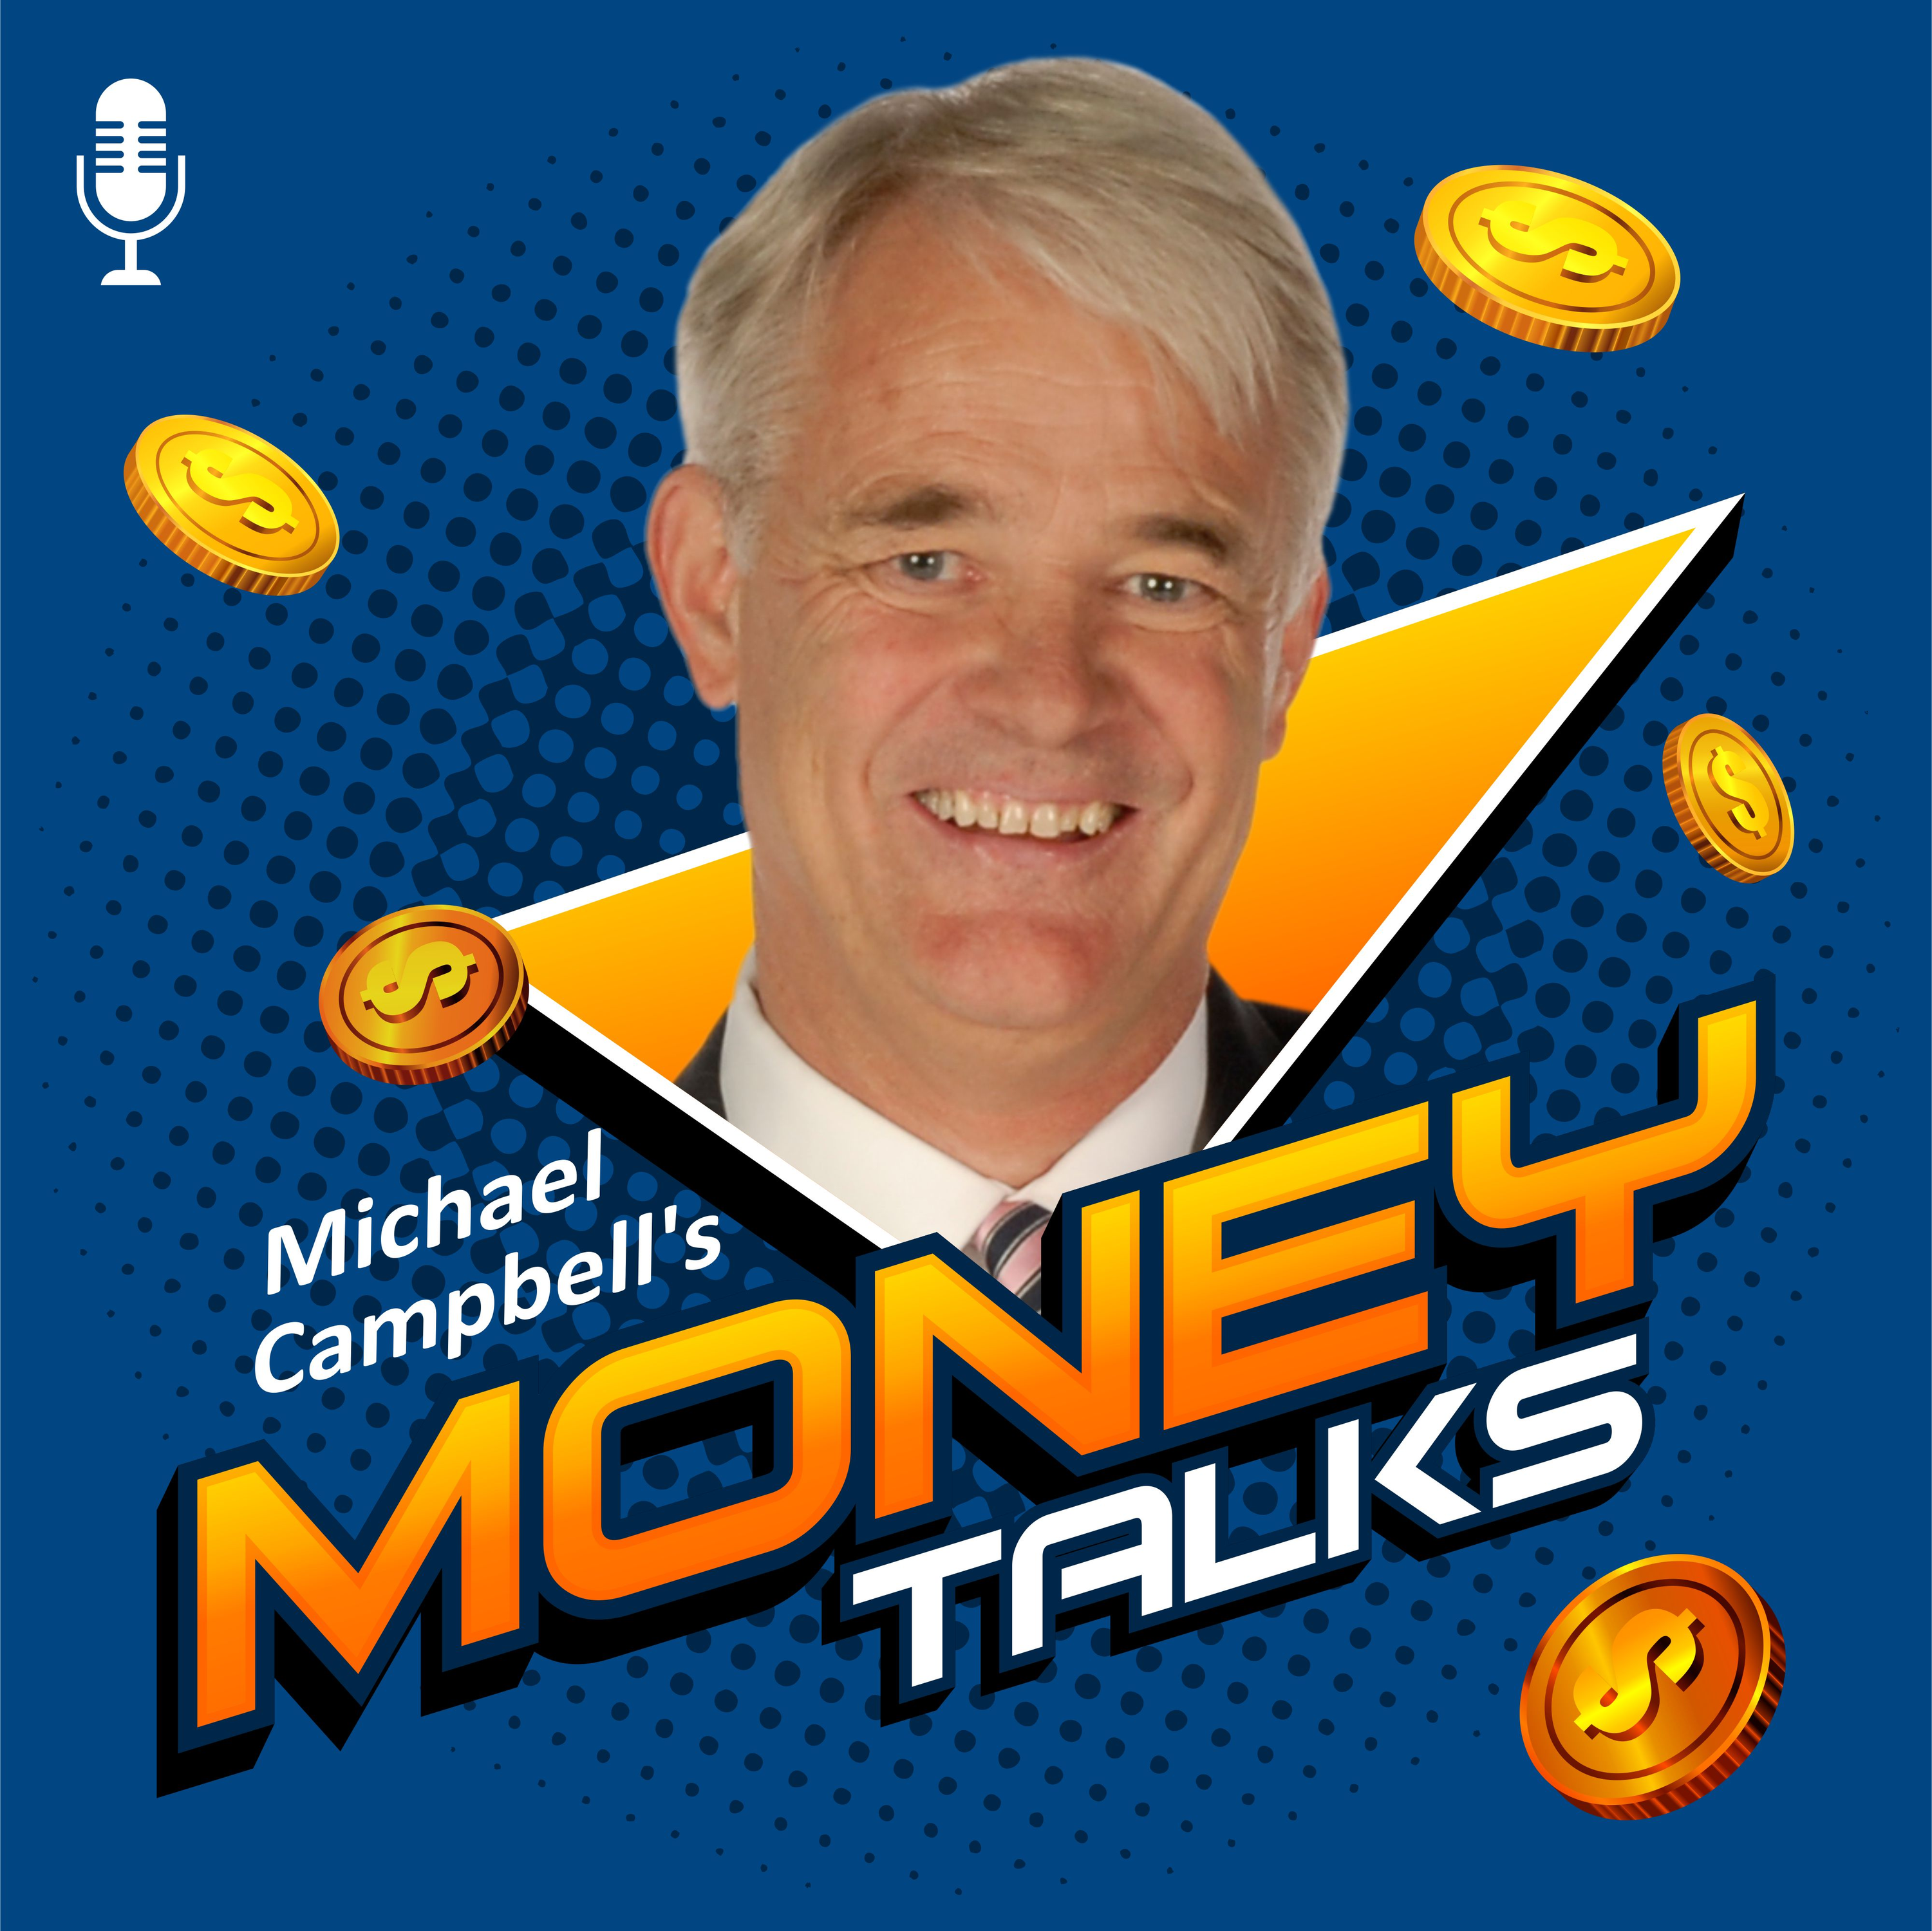 Money Talks - July 28th, 2018